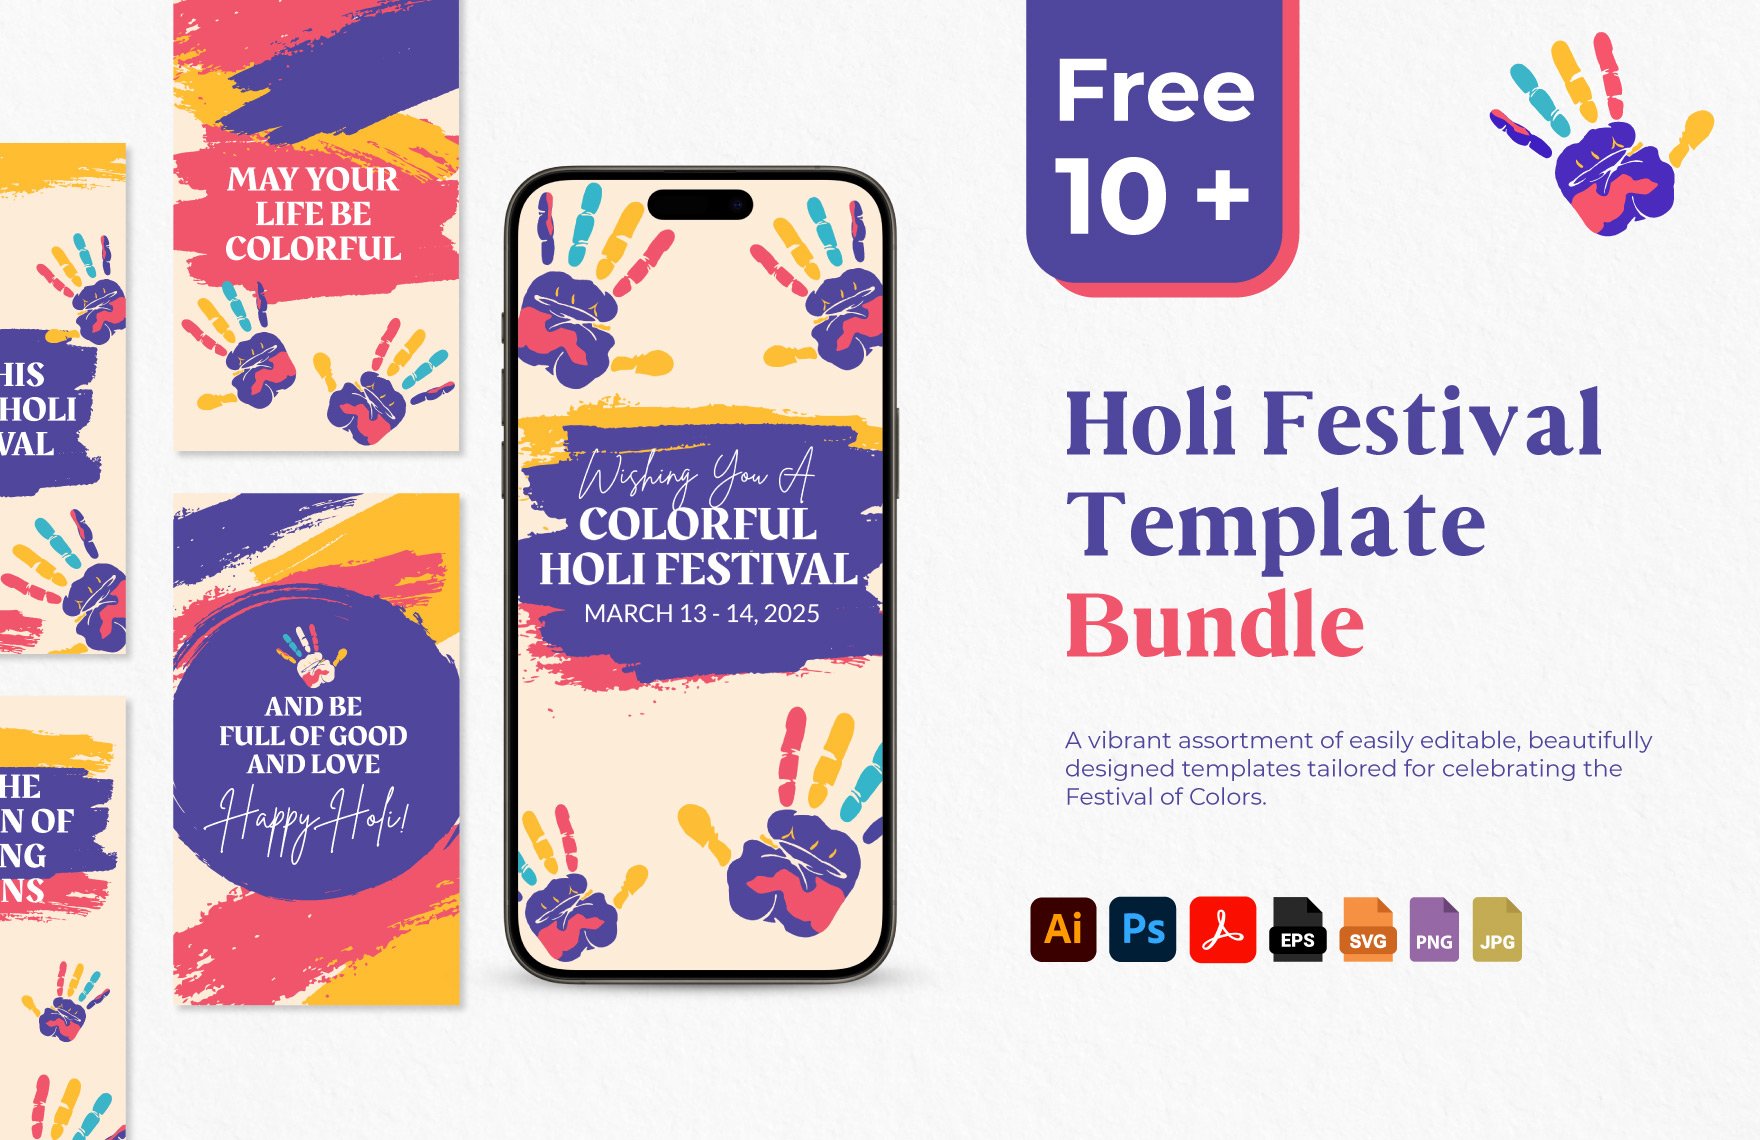 10+ Holi Festival Template Bundle